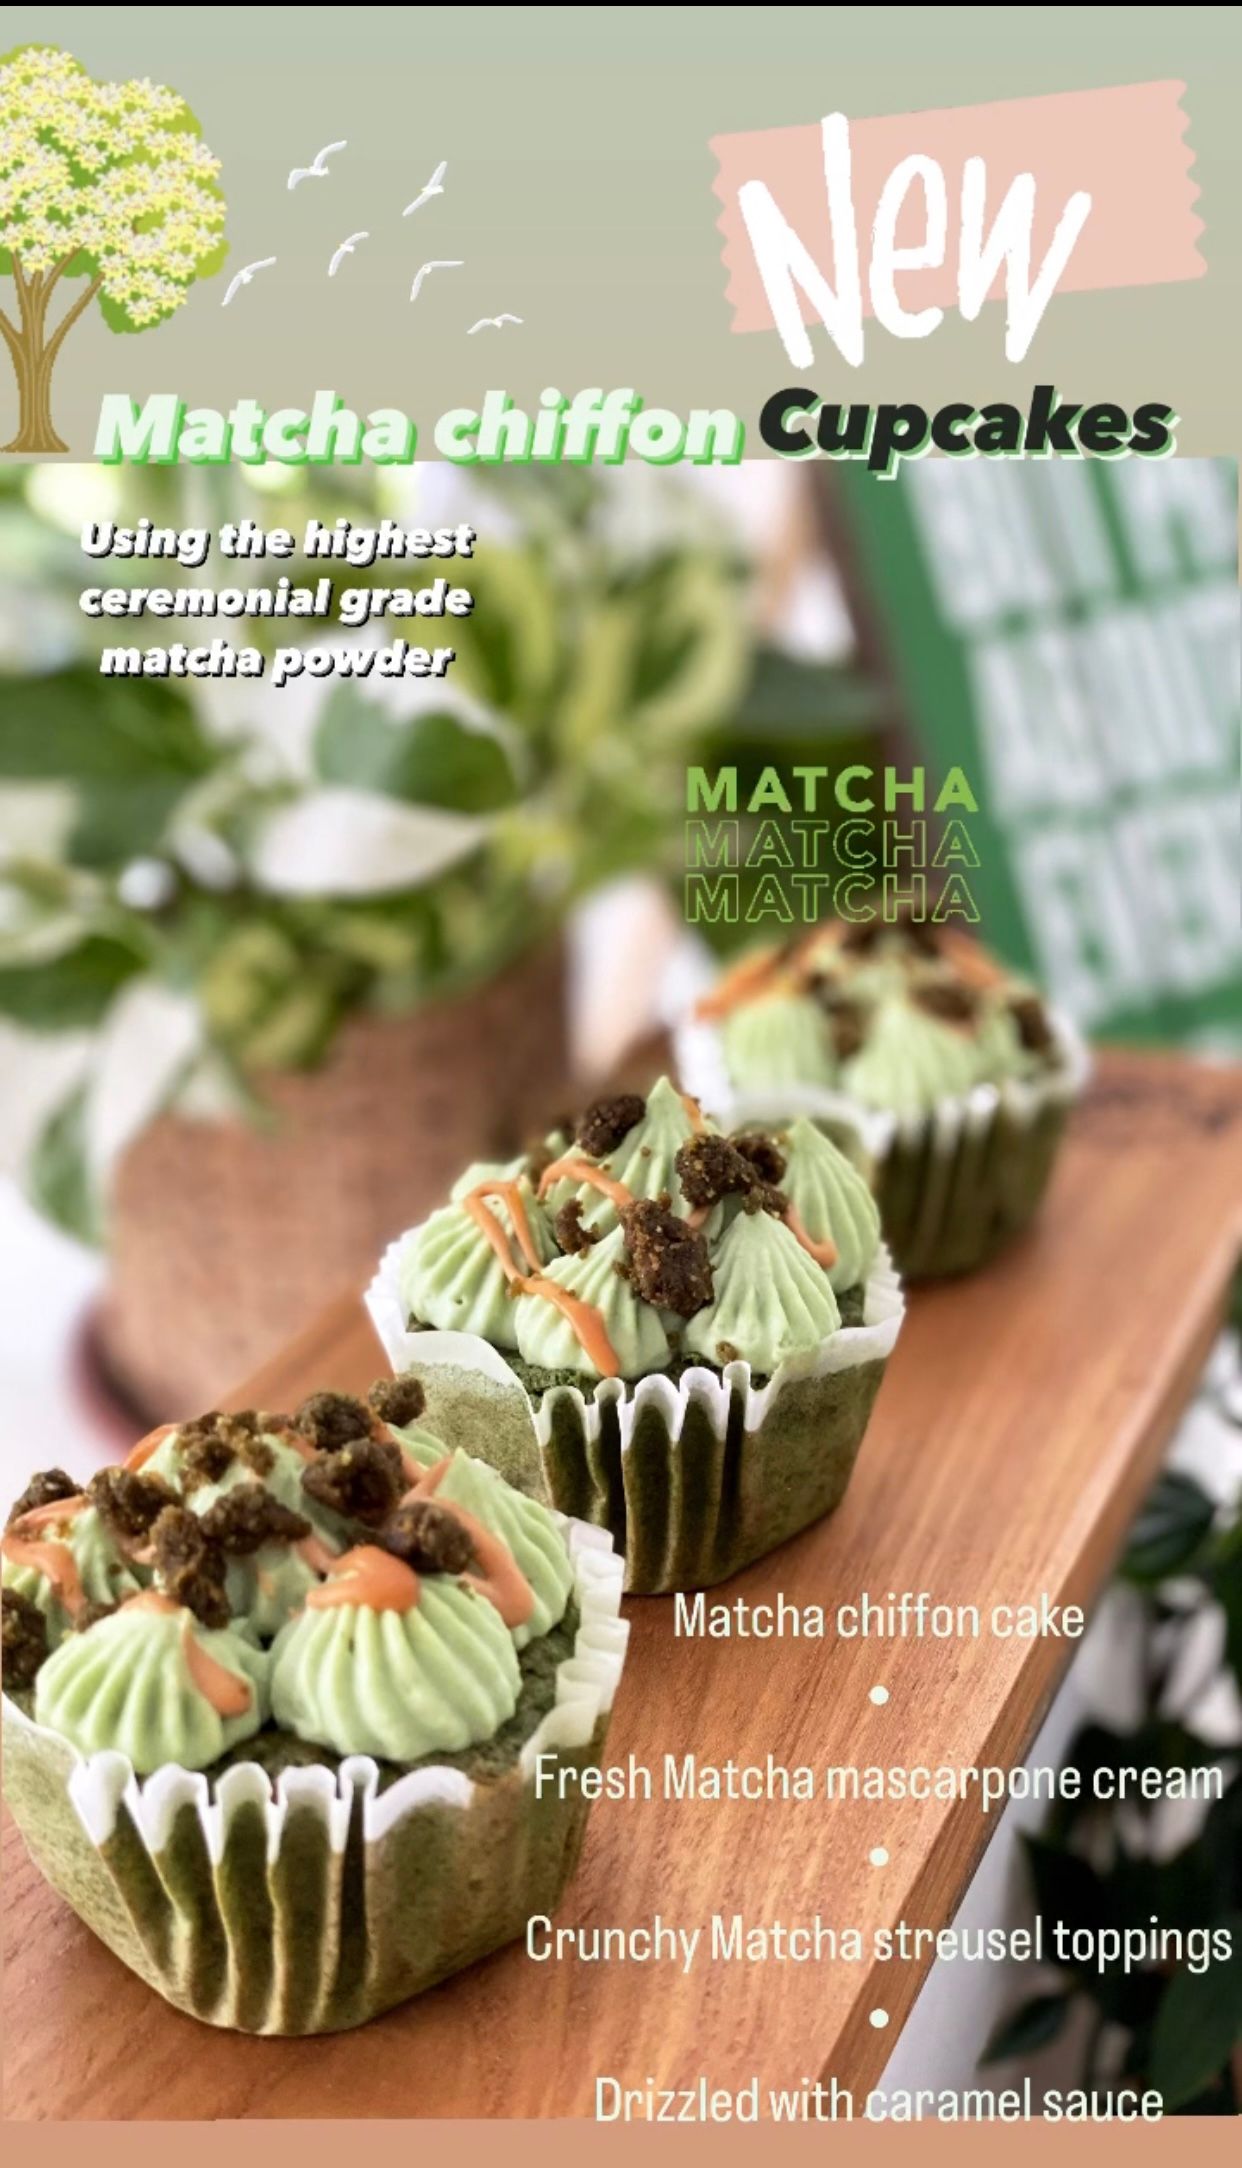 Matcha Chiffon Cupcakes with streusel topping 6pcs